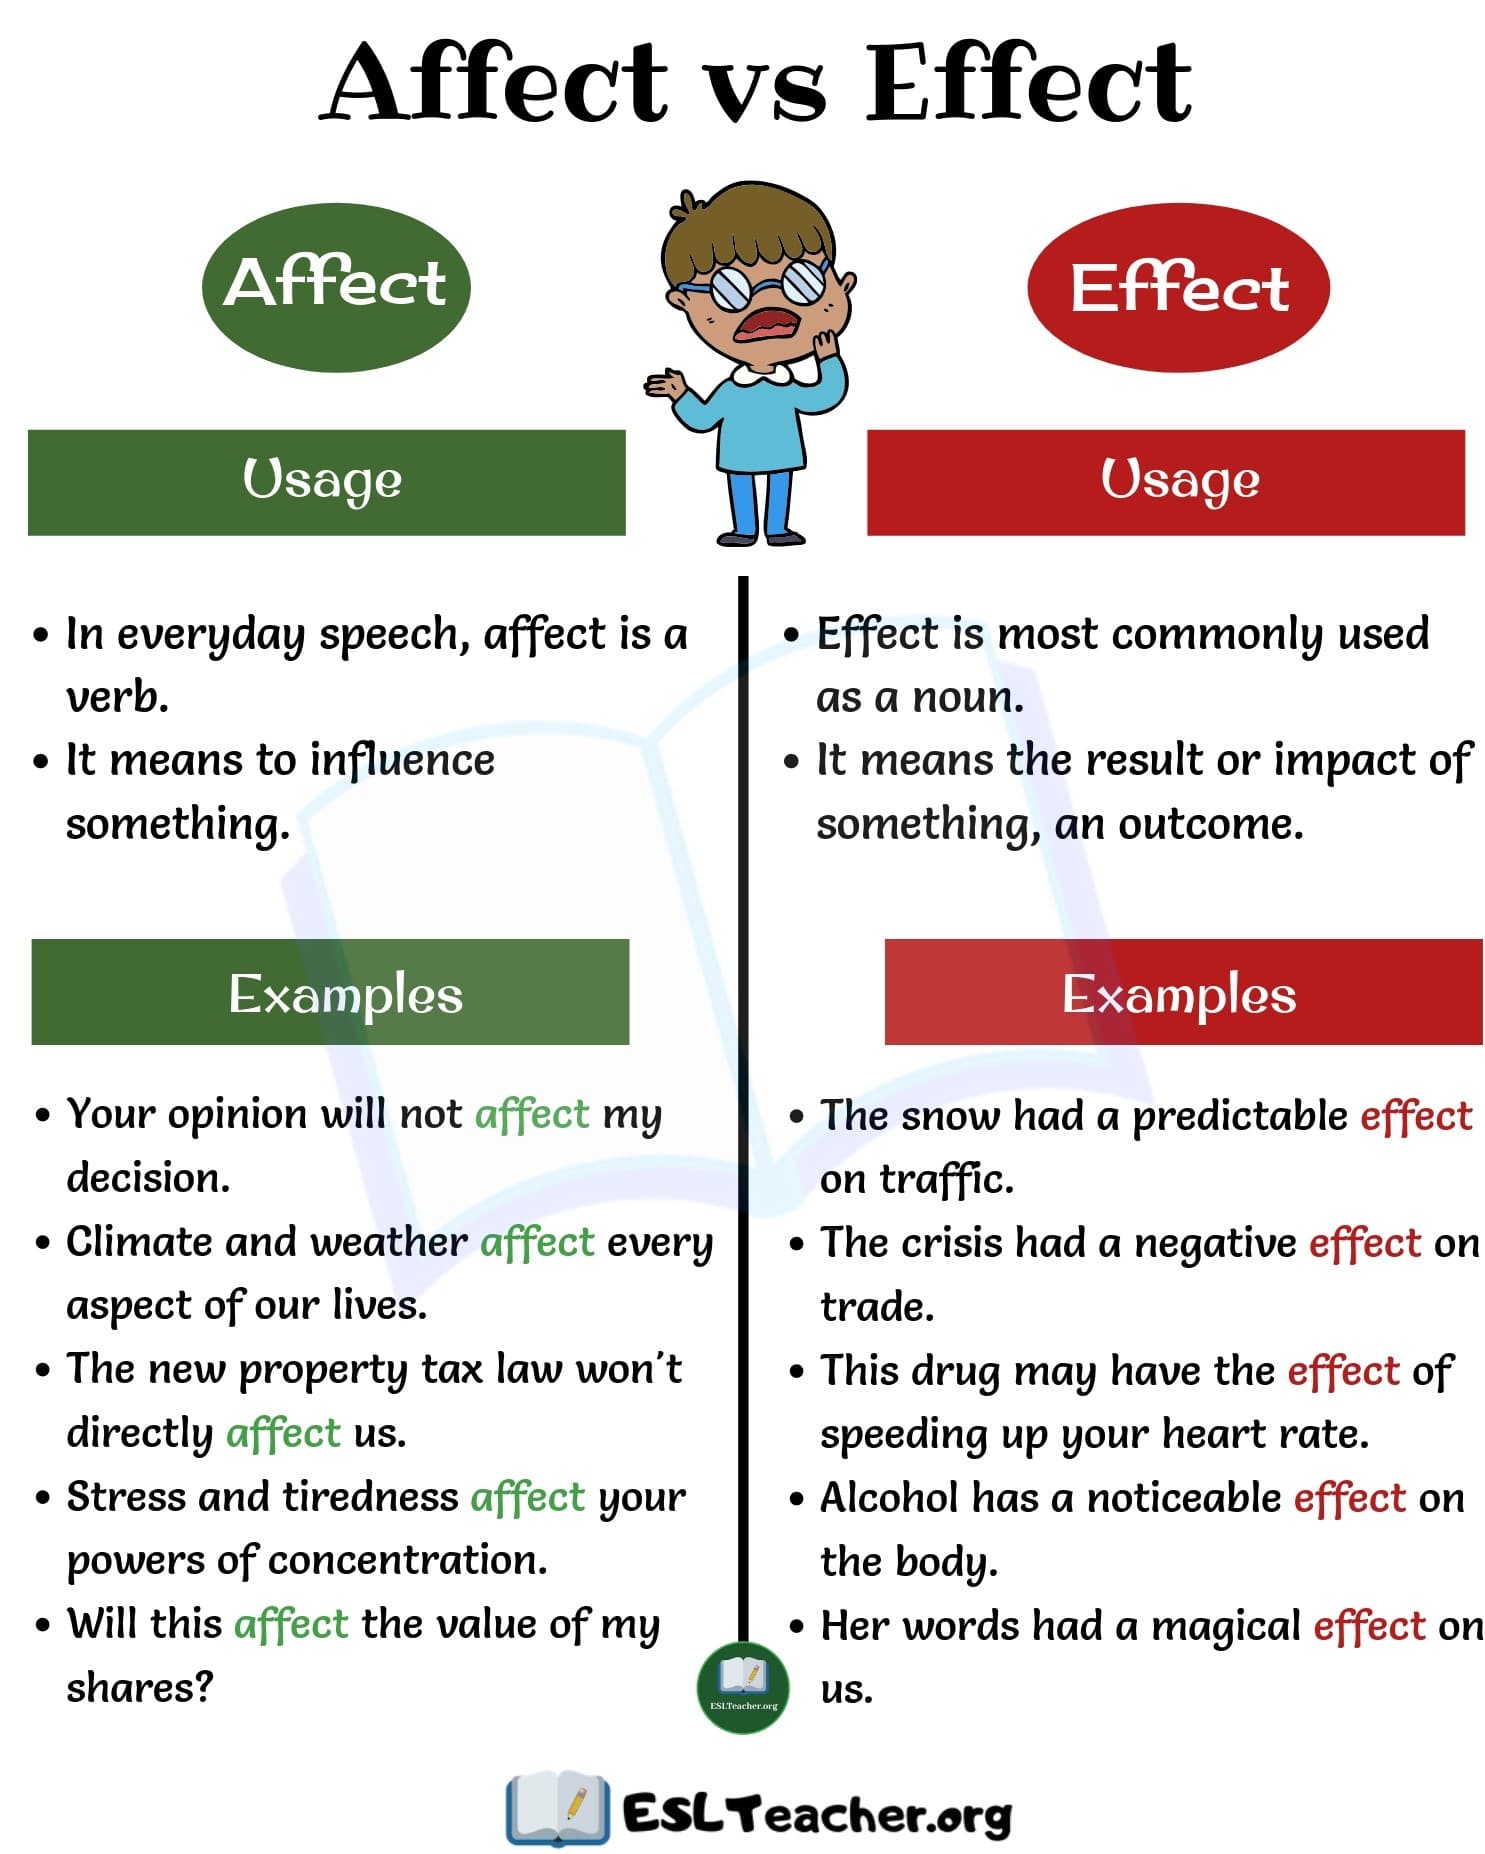 Effect vs. Affect Effect разница. Effected affected разница. Предложения со словом affects. Предложения со словом Effected.